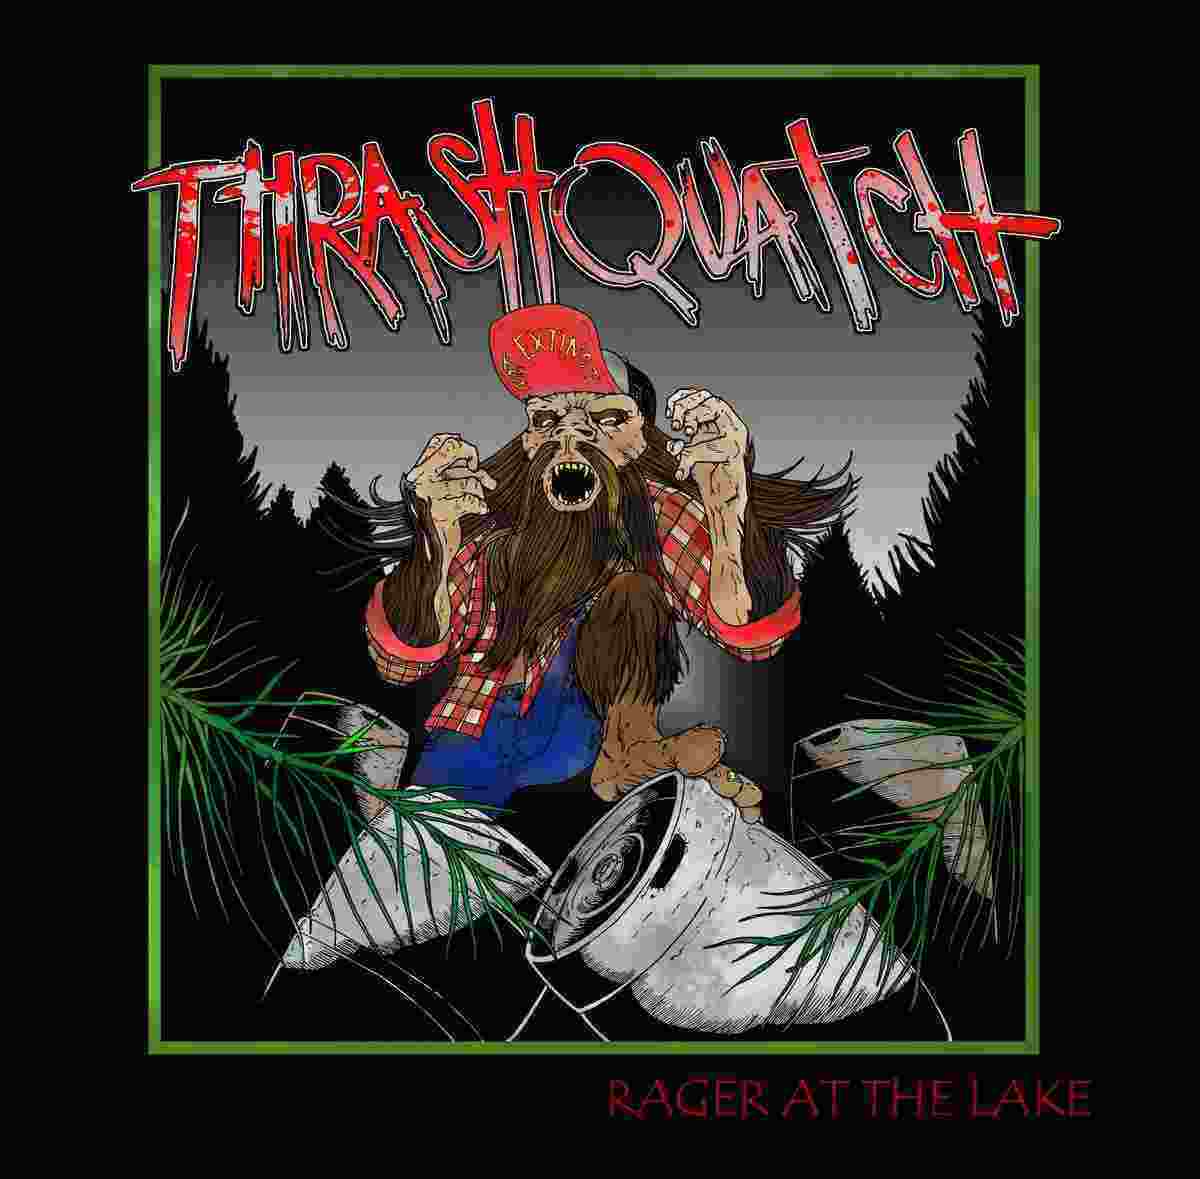 Thrashquatch - Rager at the Lake